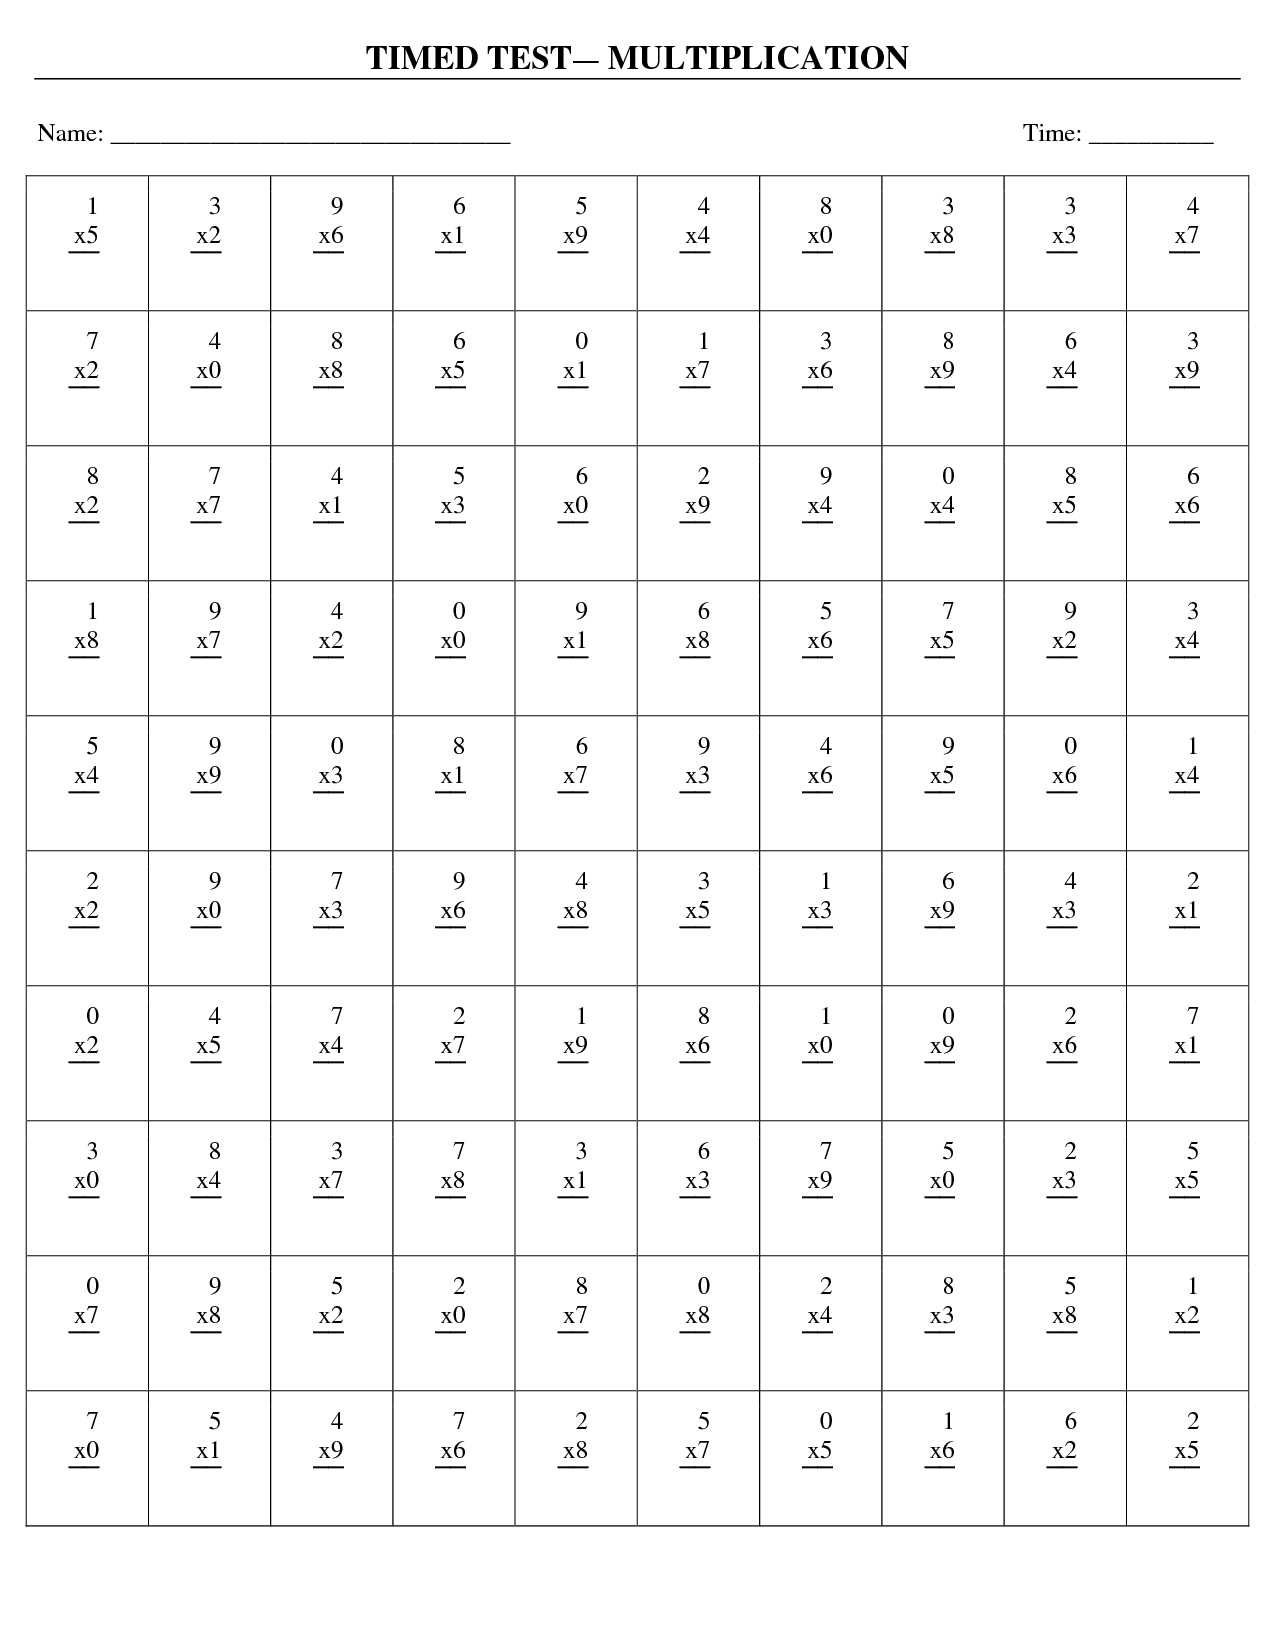 printable-timed-multiplication-quiz-printable-multiplication-flash-cards